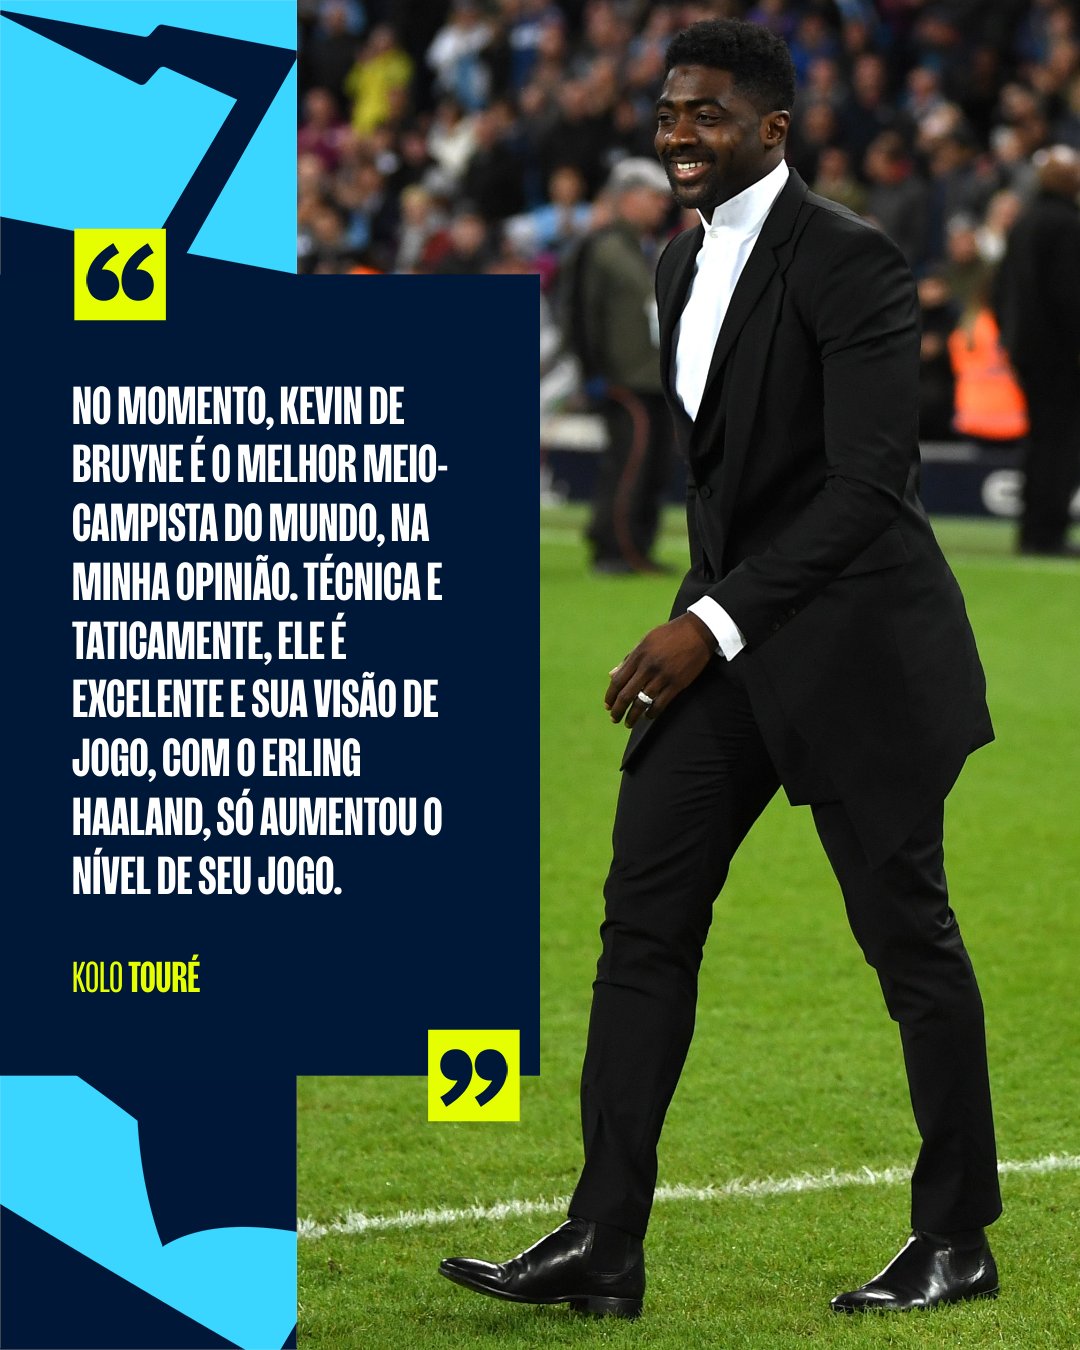 Manchester City on X: Kolo Kolo, Kolo Kolo, Kolo Touré! 🎶 🔷  #MCFCPortugues